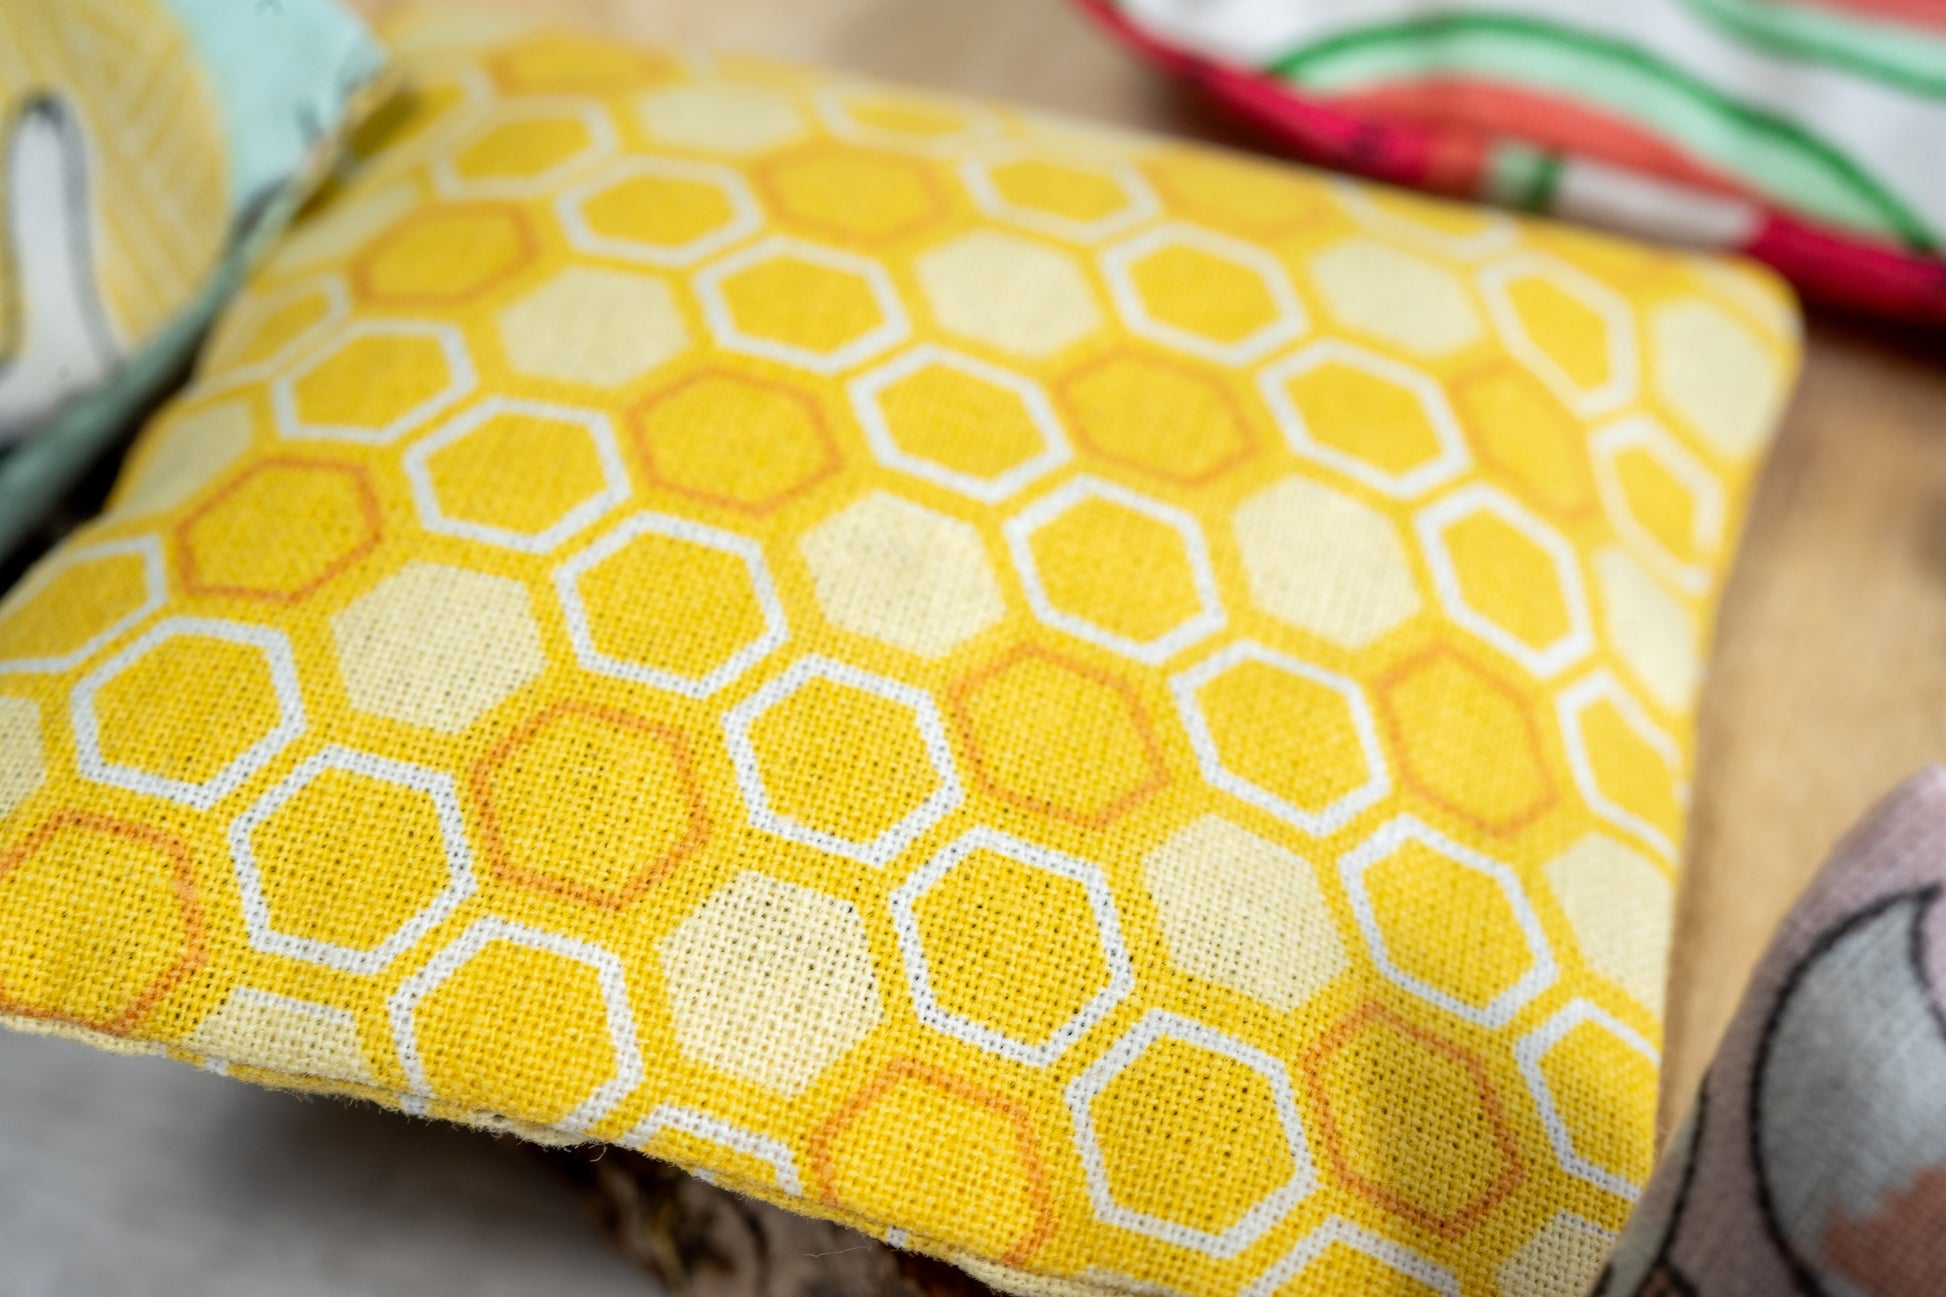 Honeycomb patterned cat kicker. | Kicker pour chats à motifs de rayons de miel.